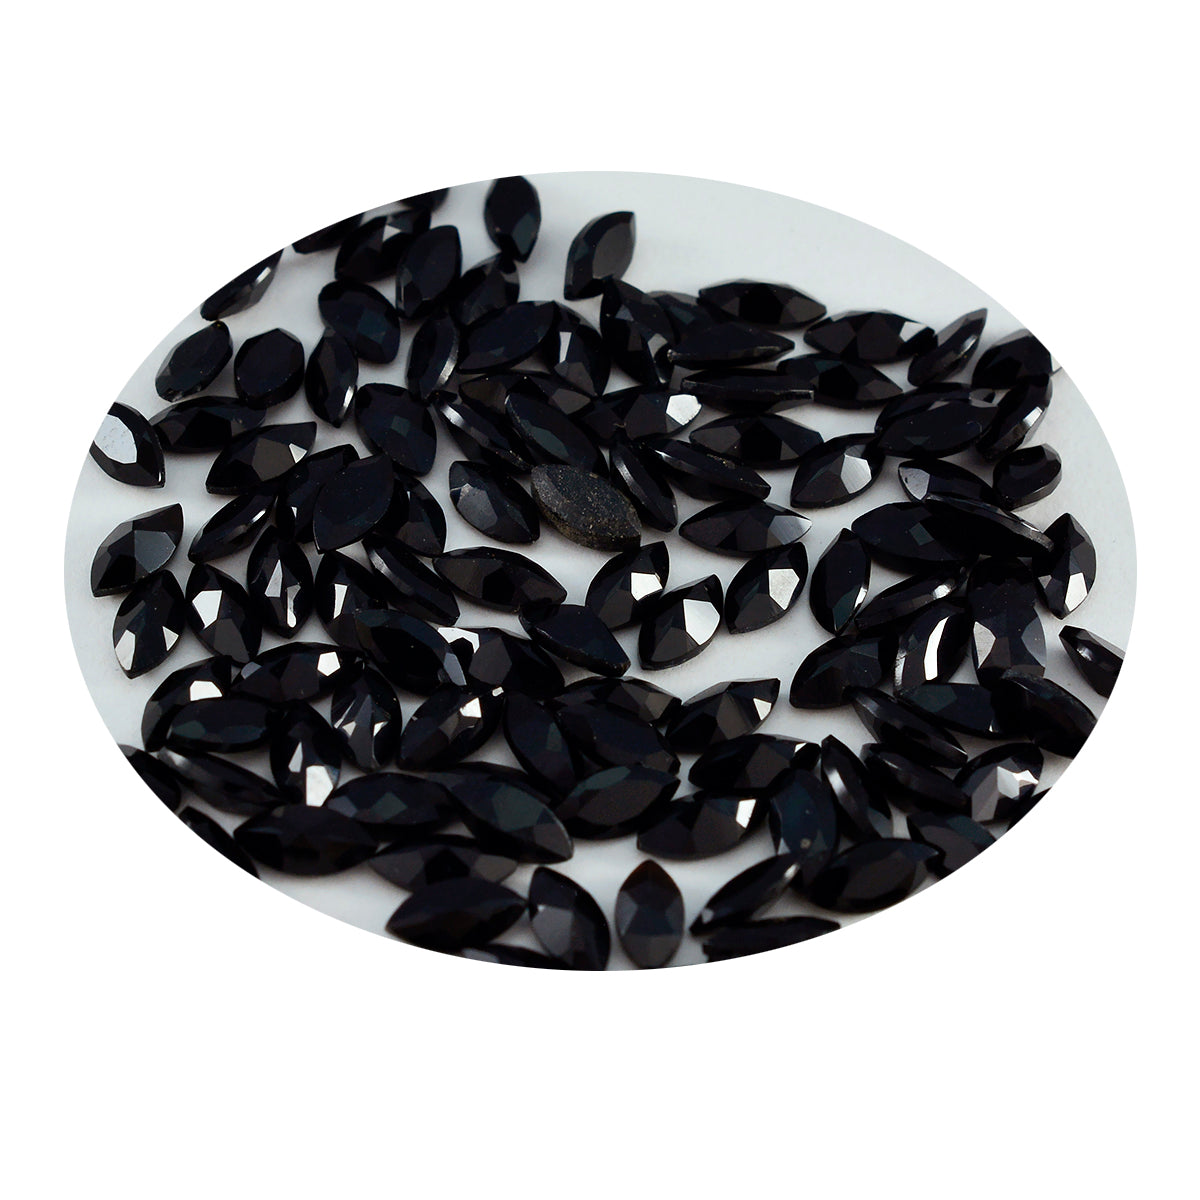 Riyogems 1PC Natural Black Onyx Faceted 2x4 mm Marquise Shape Nice Quality Gems